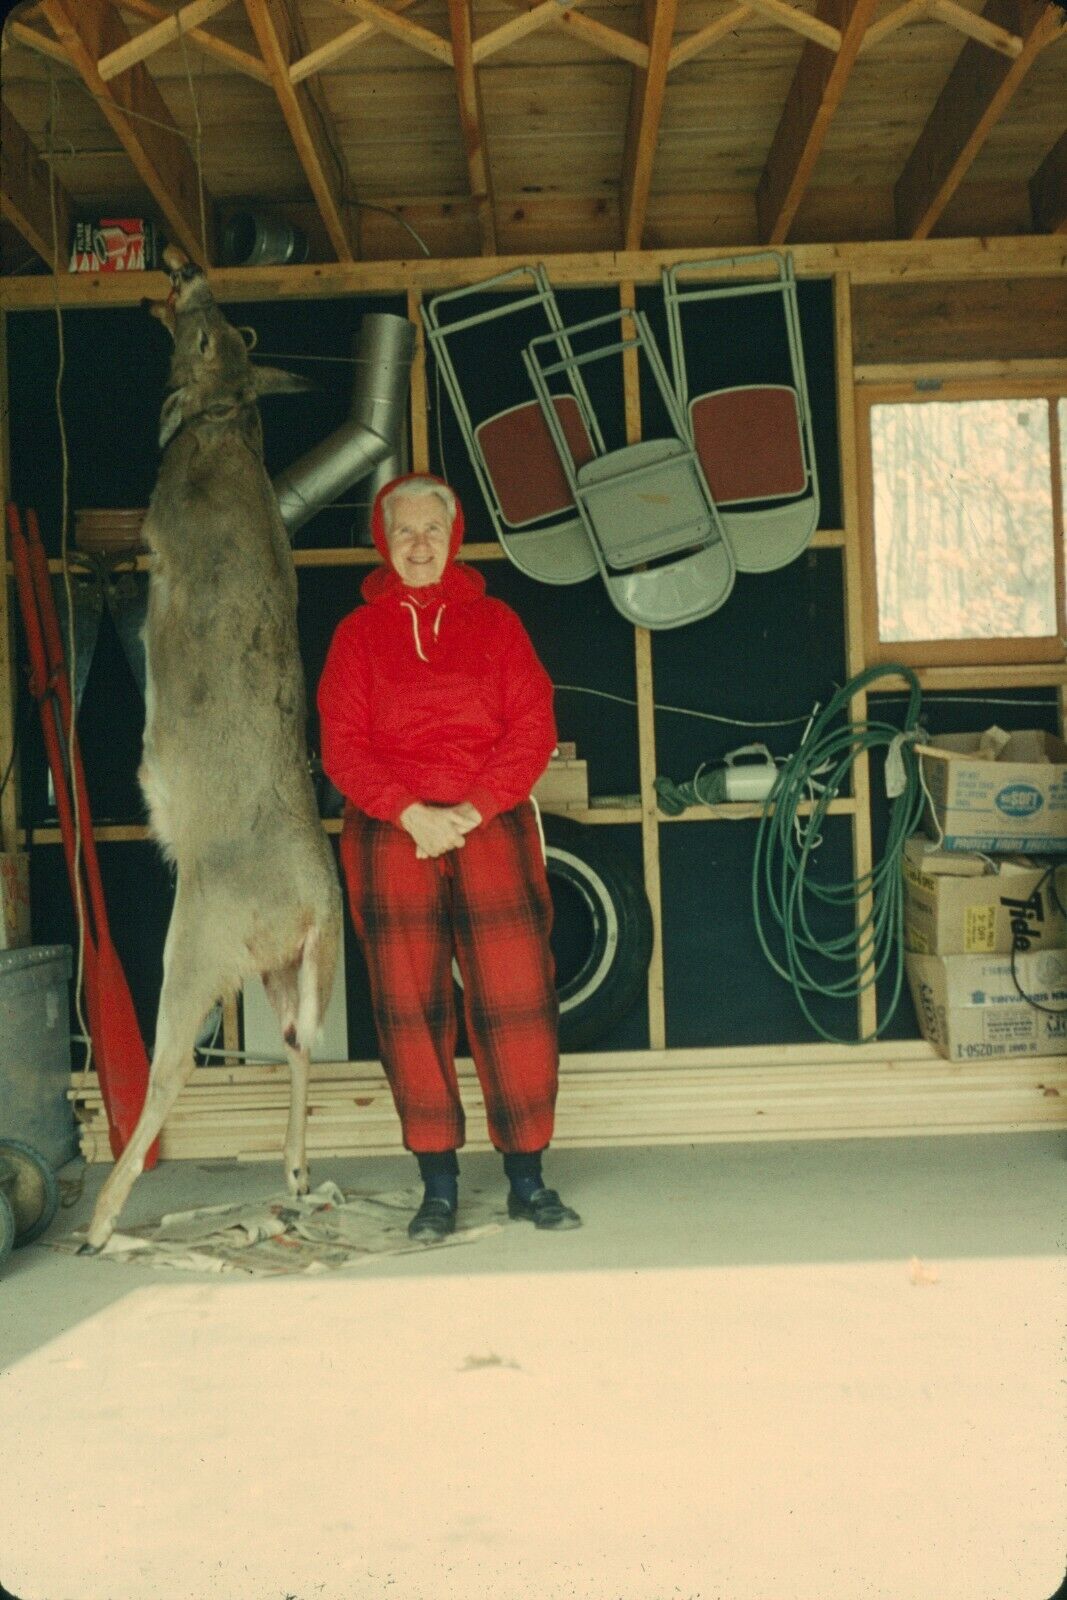 1965 Woman Smiling by Hunted Dead Deer Hanging in Garage Vintage 35mm Slide